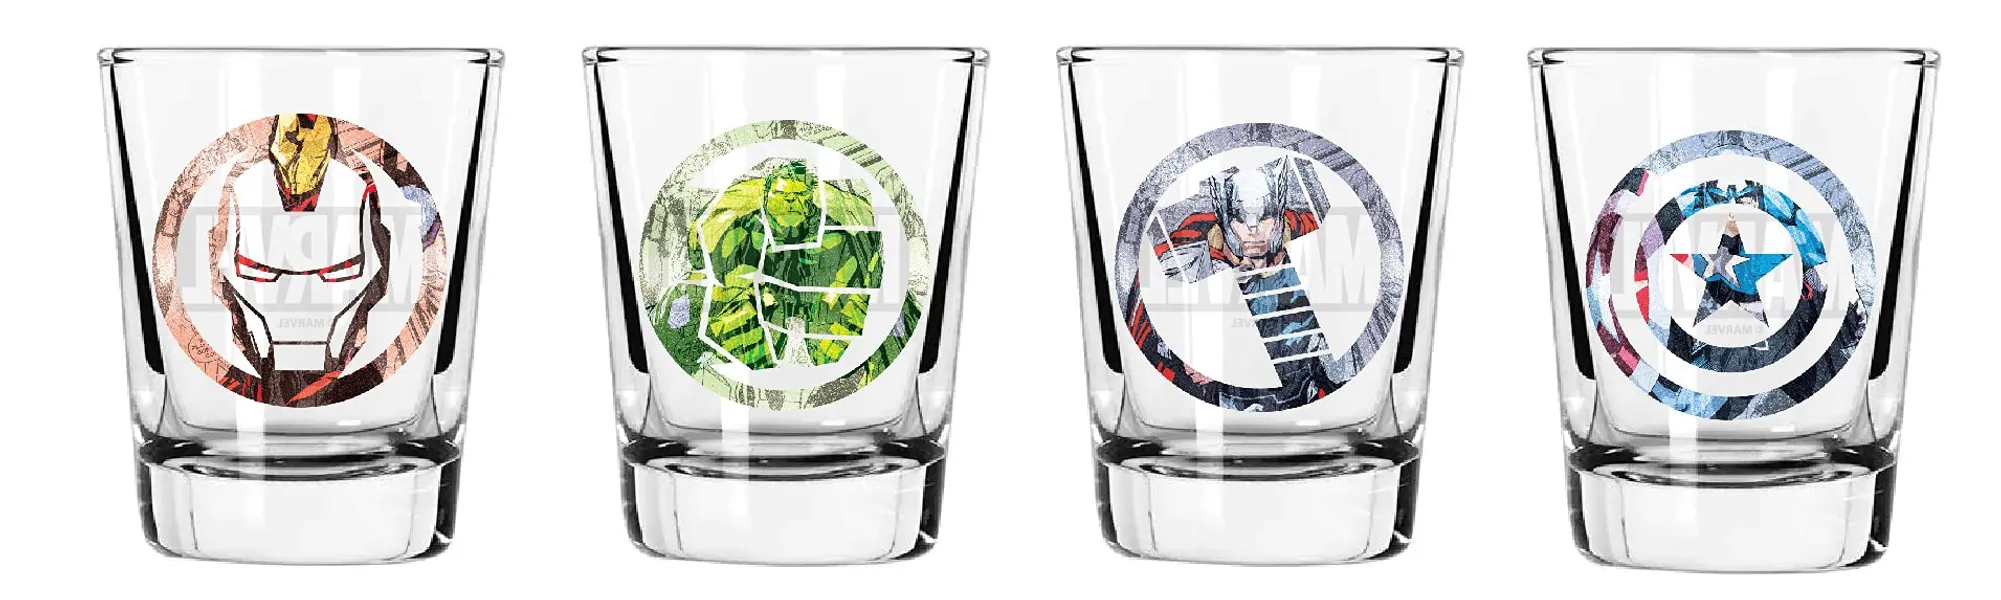 Marvel Icons Glass Set - 2 oz. Glass Capacity - Set of 4 Glasses - Classic Shape